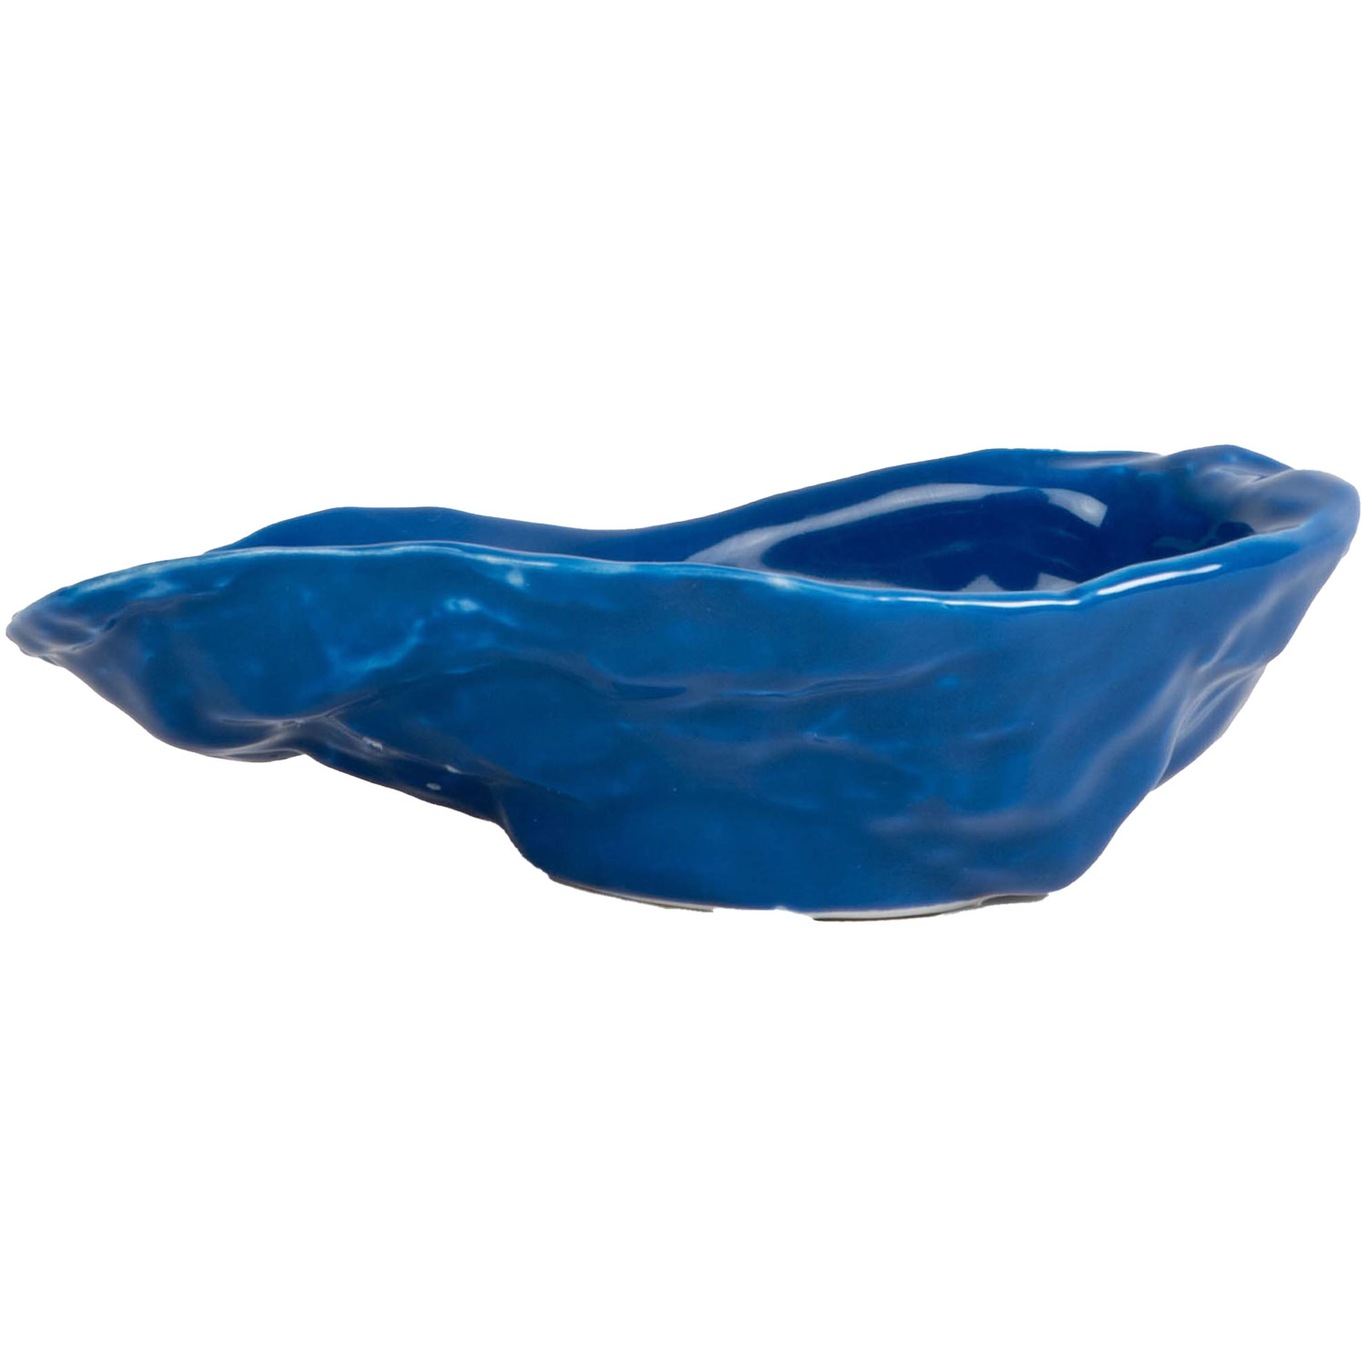 Oyster Schüssel 8x13 cm, Blau